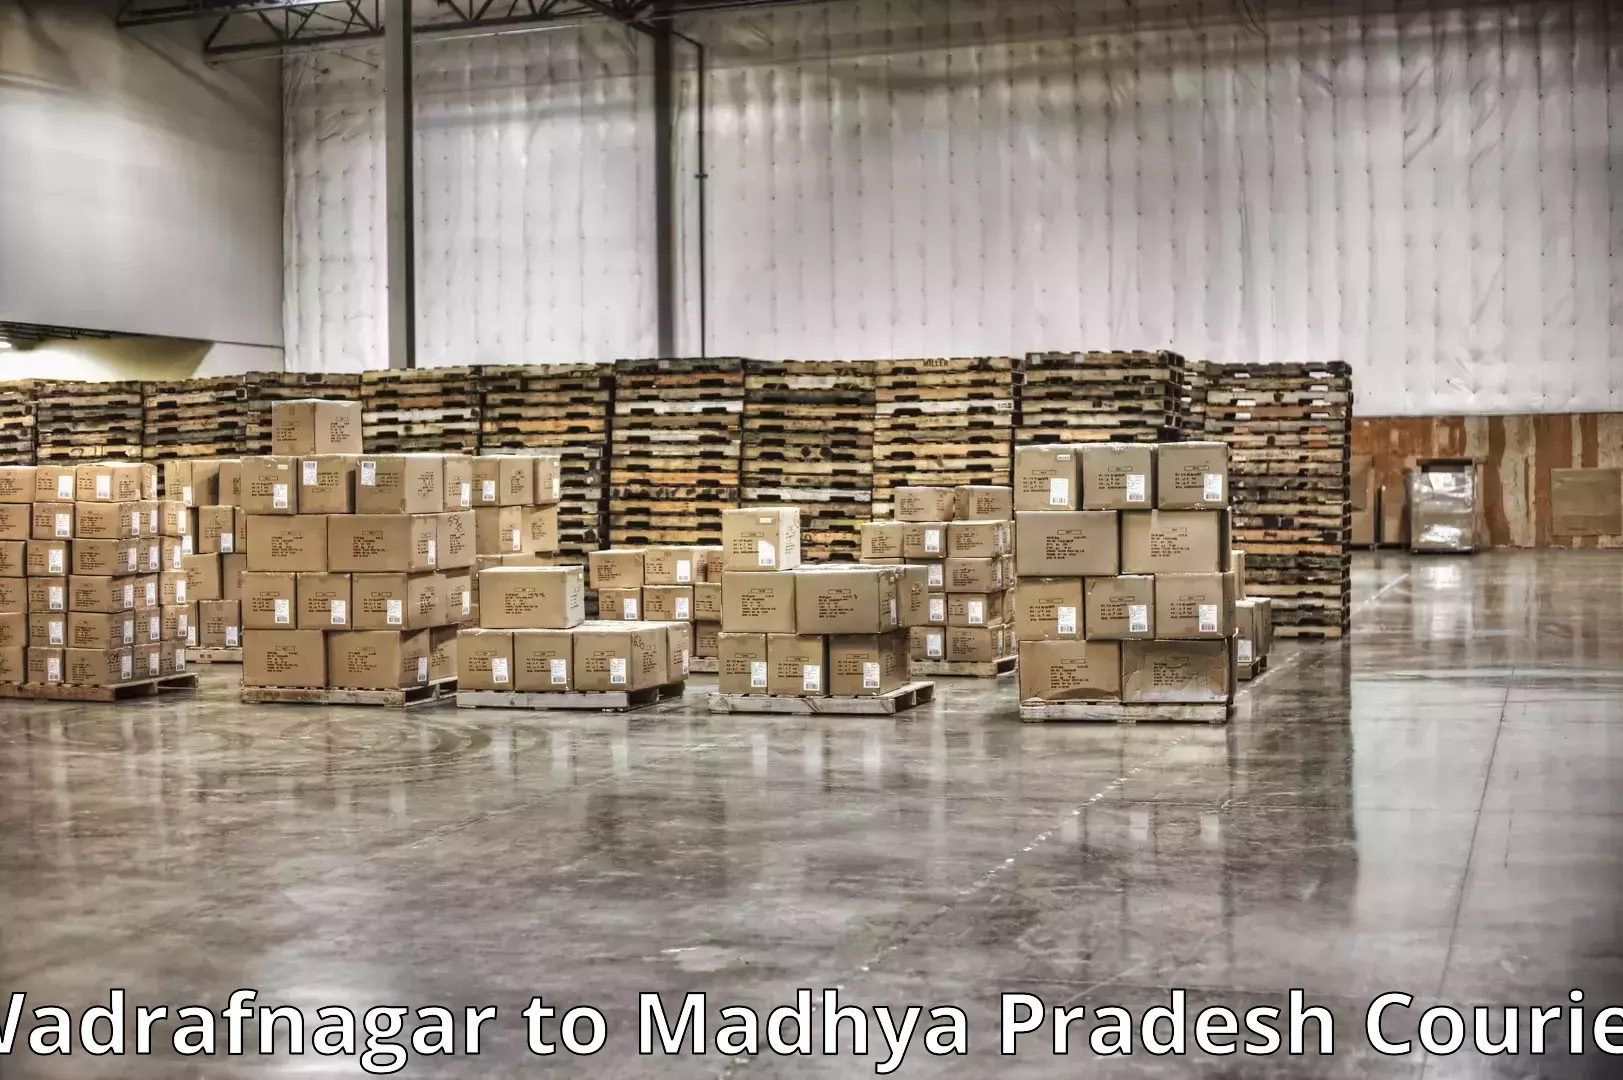 Moving service excellence Wadrafnagar to Agar